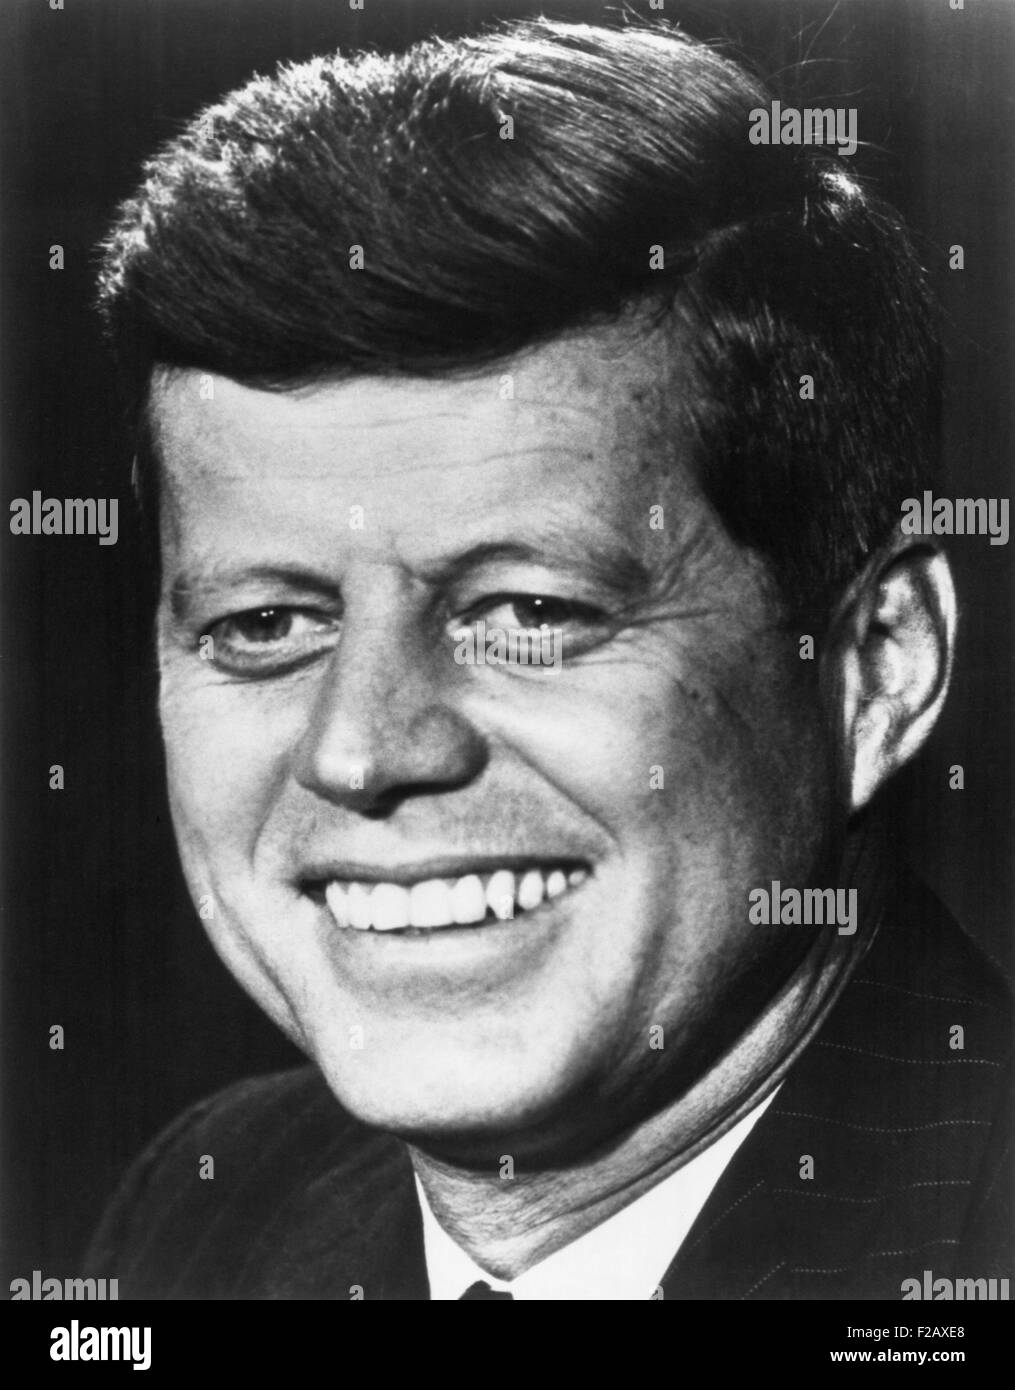 Senator John Kennedy. 1960 campaign portrait. (BSLOC 2015 2 222) Stock Photo